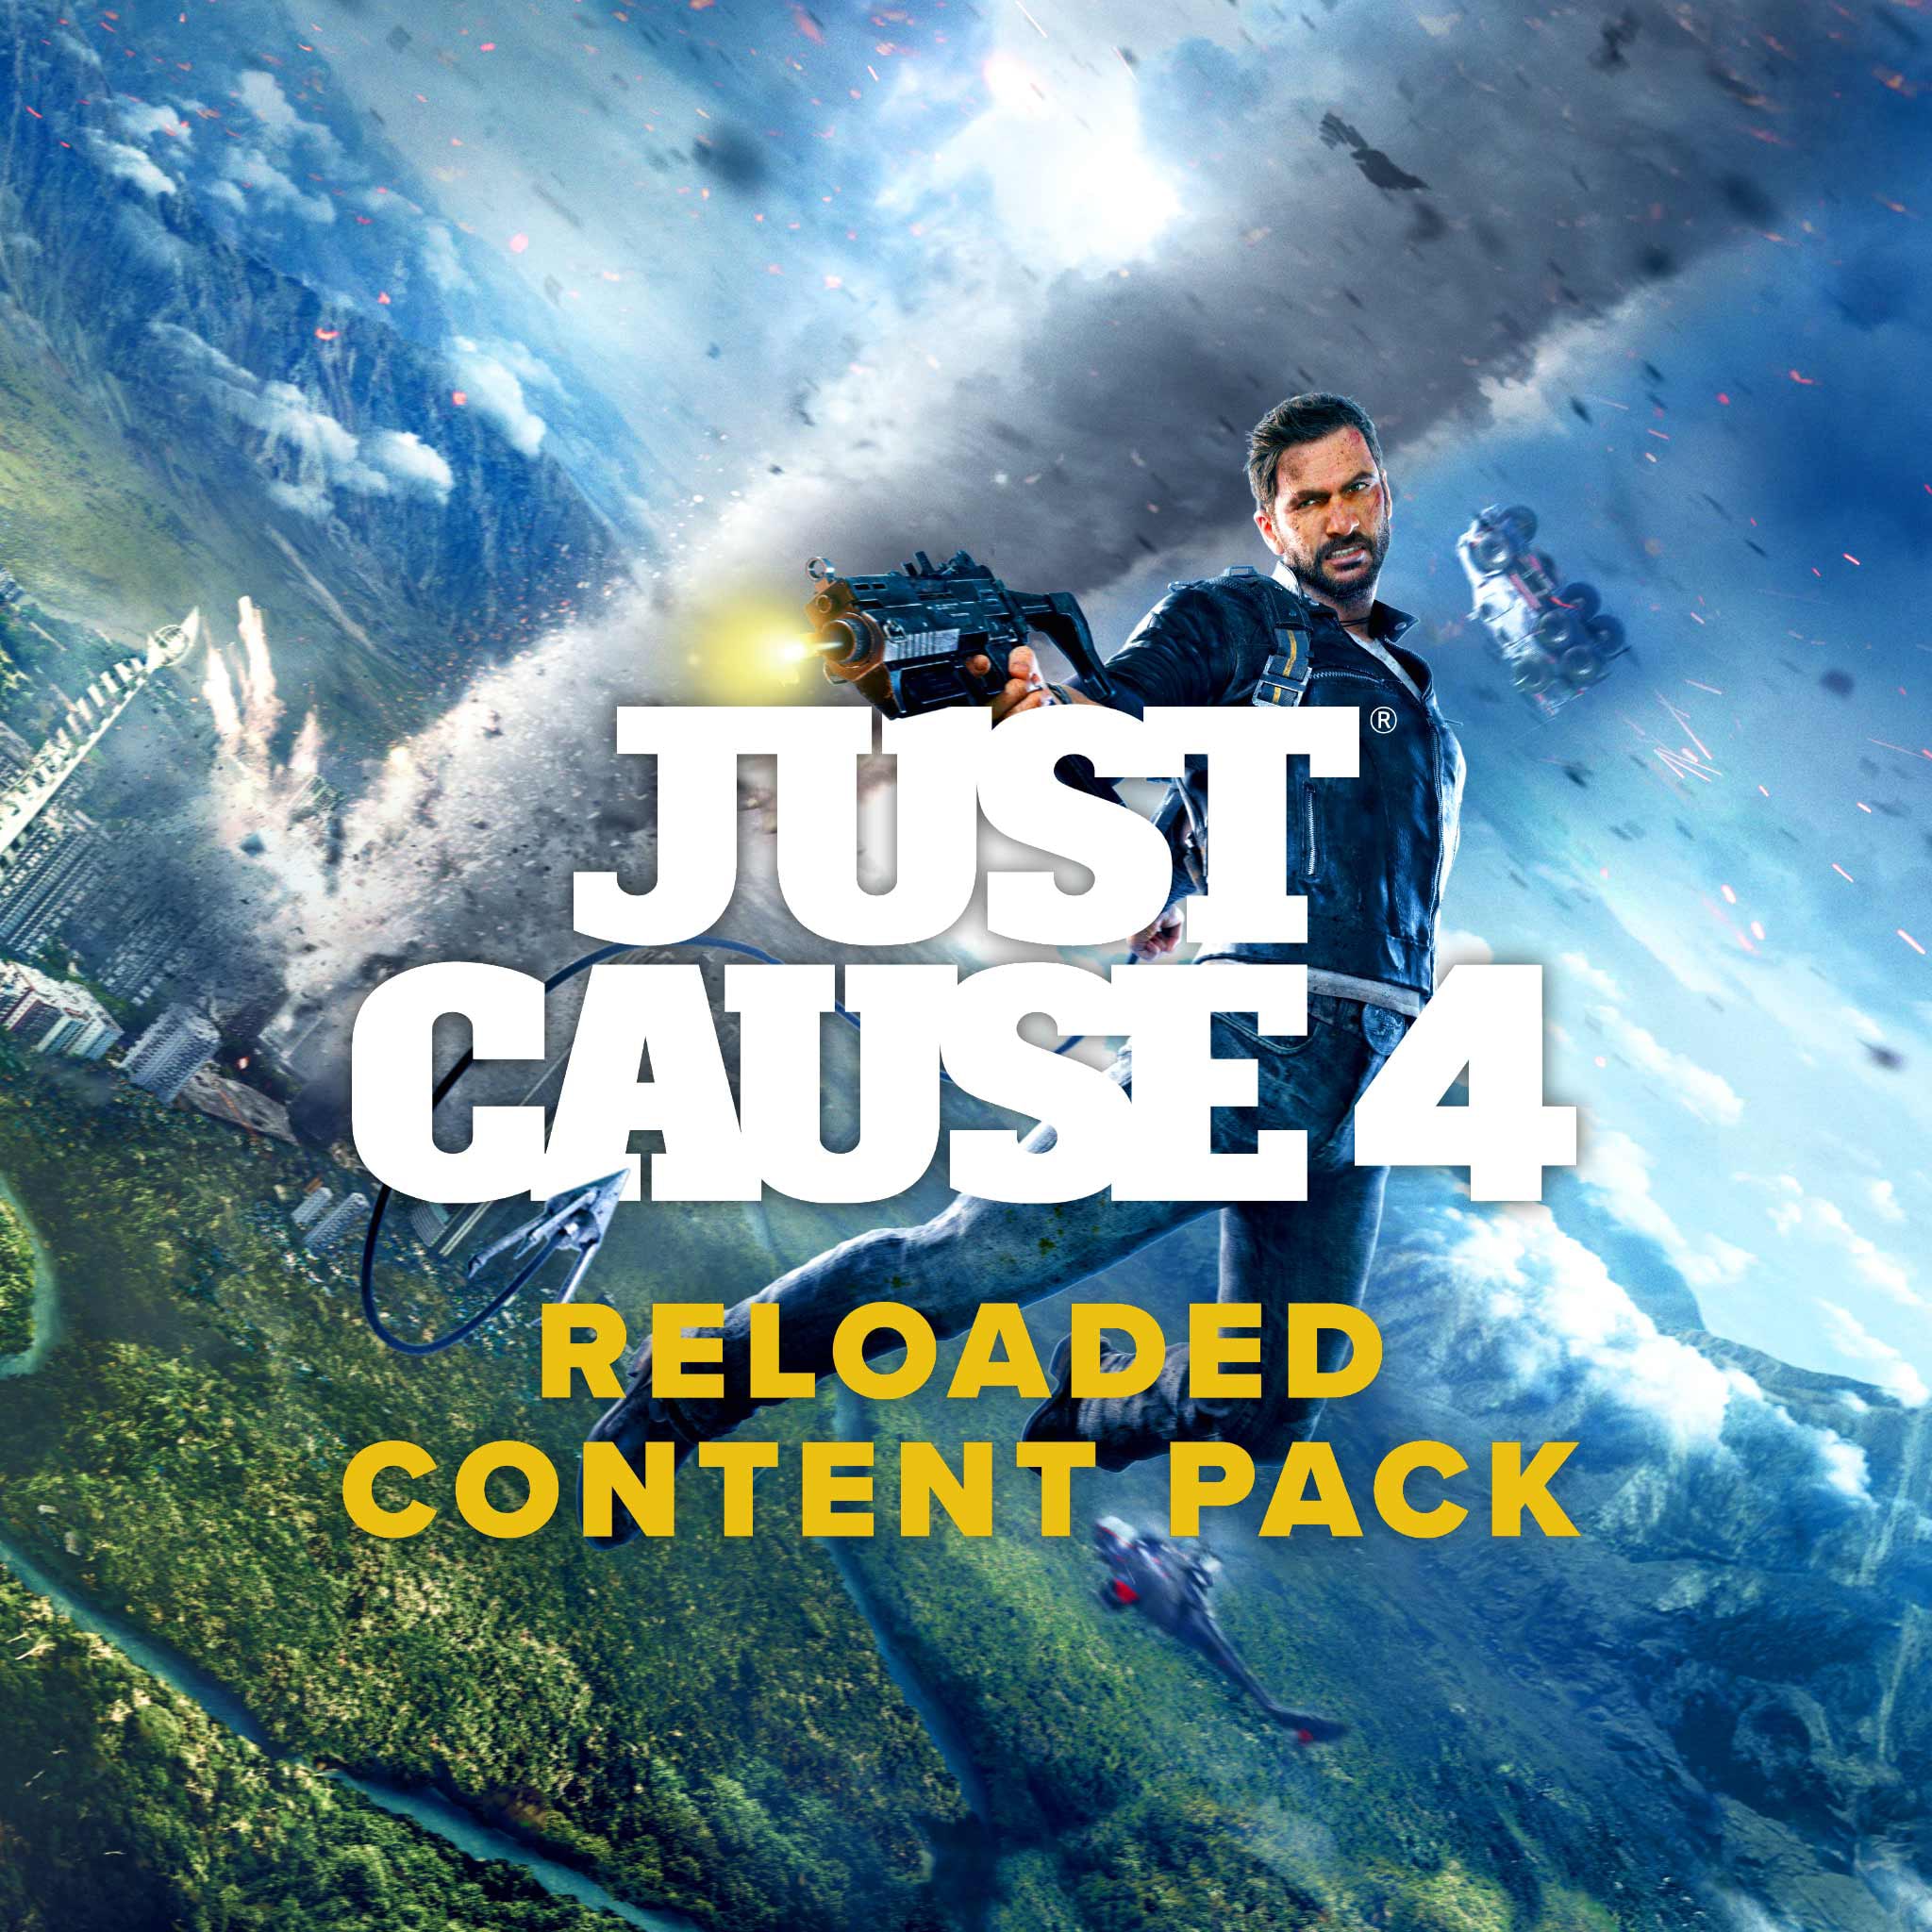 Just Cause 4: Reloaded İçerik Paketi